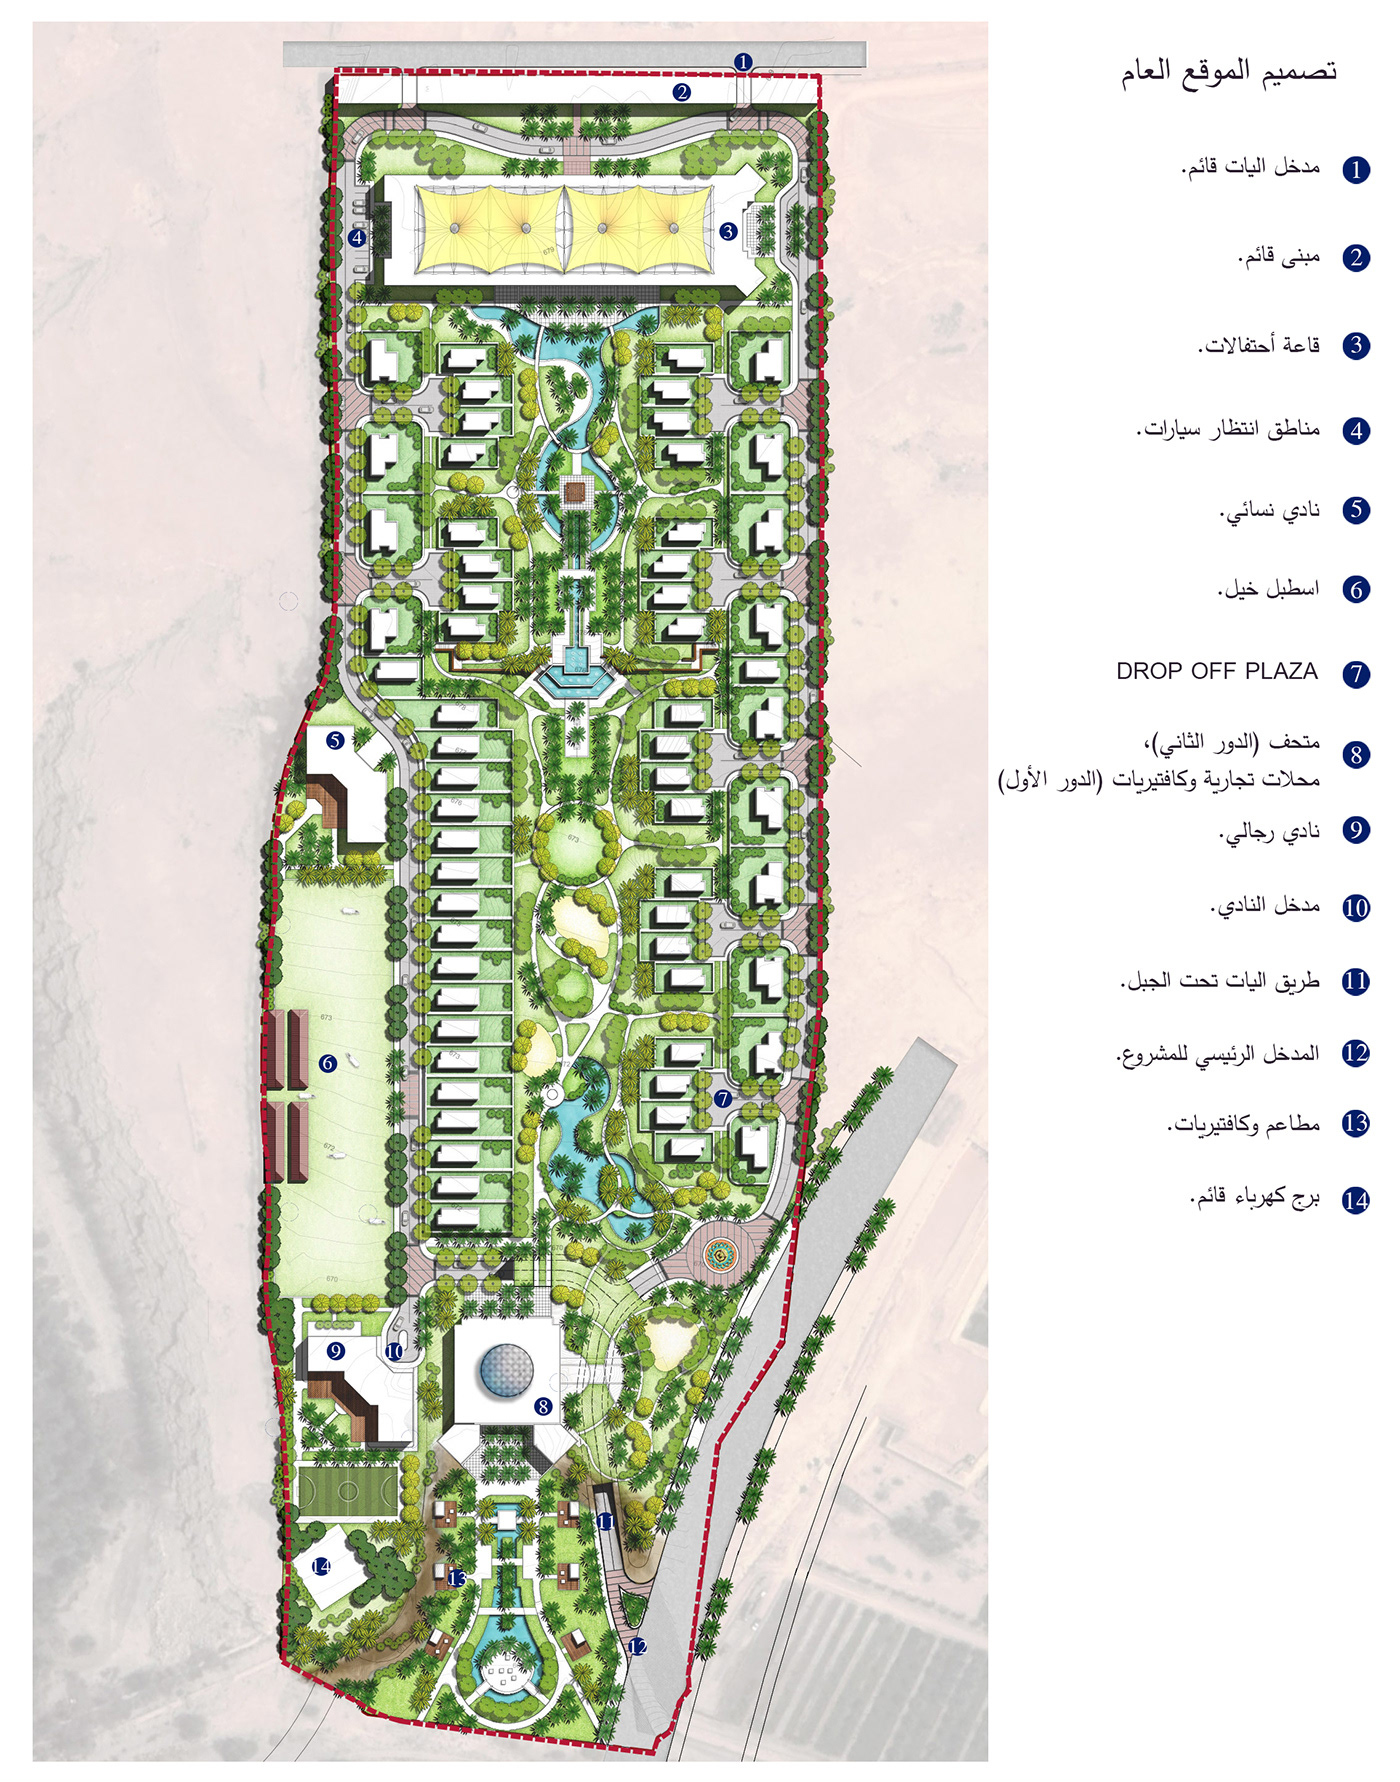 compound Gated Communities Landscape Mixed Use Development residential resort Urban Design urban planning мастер план